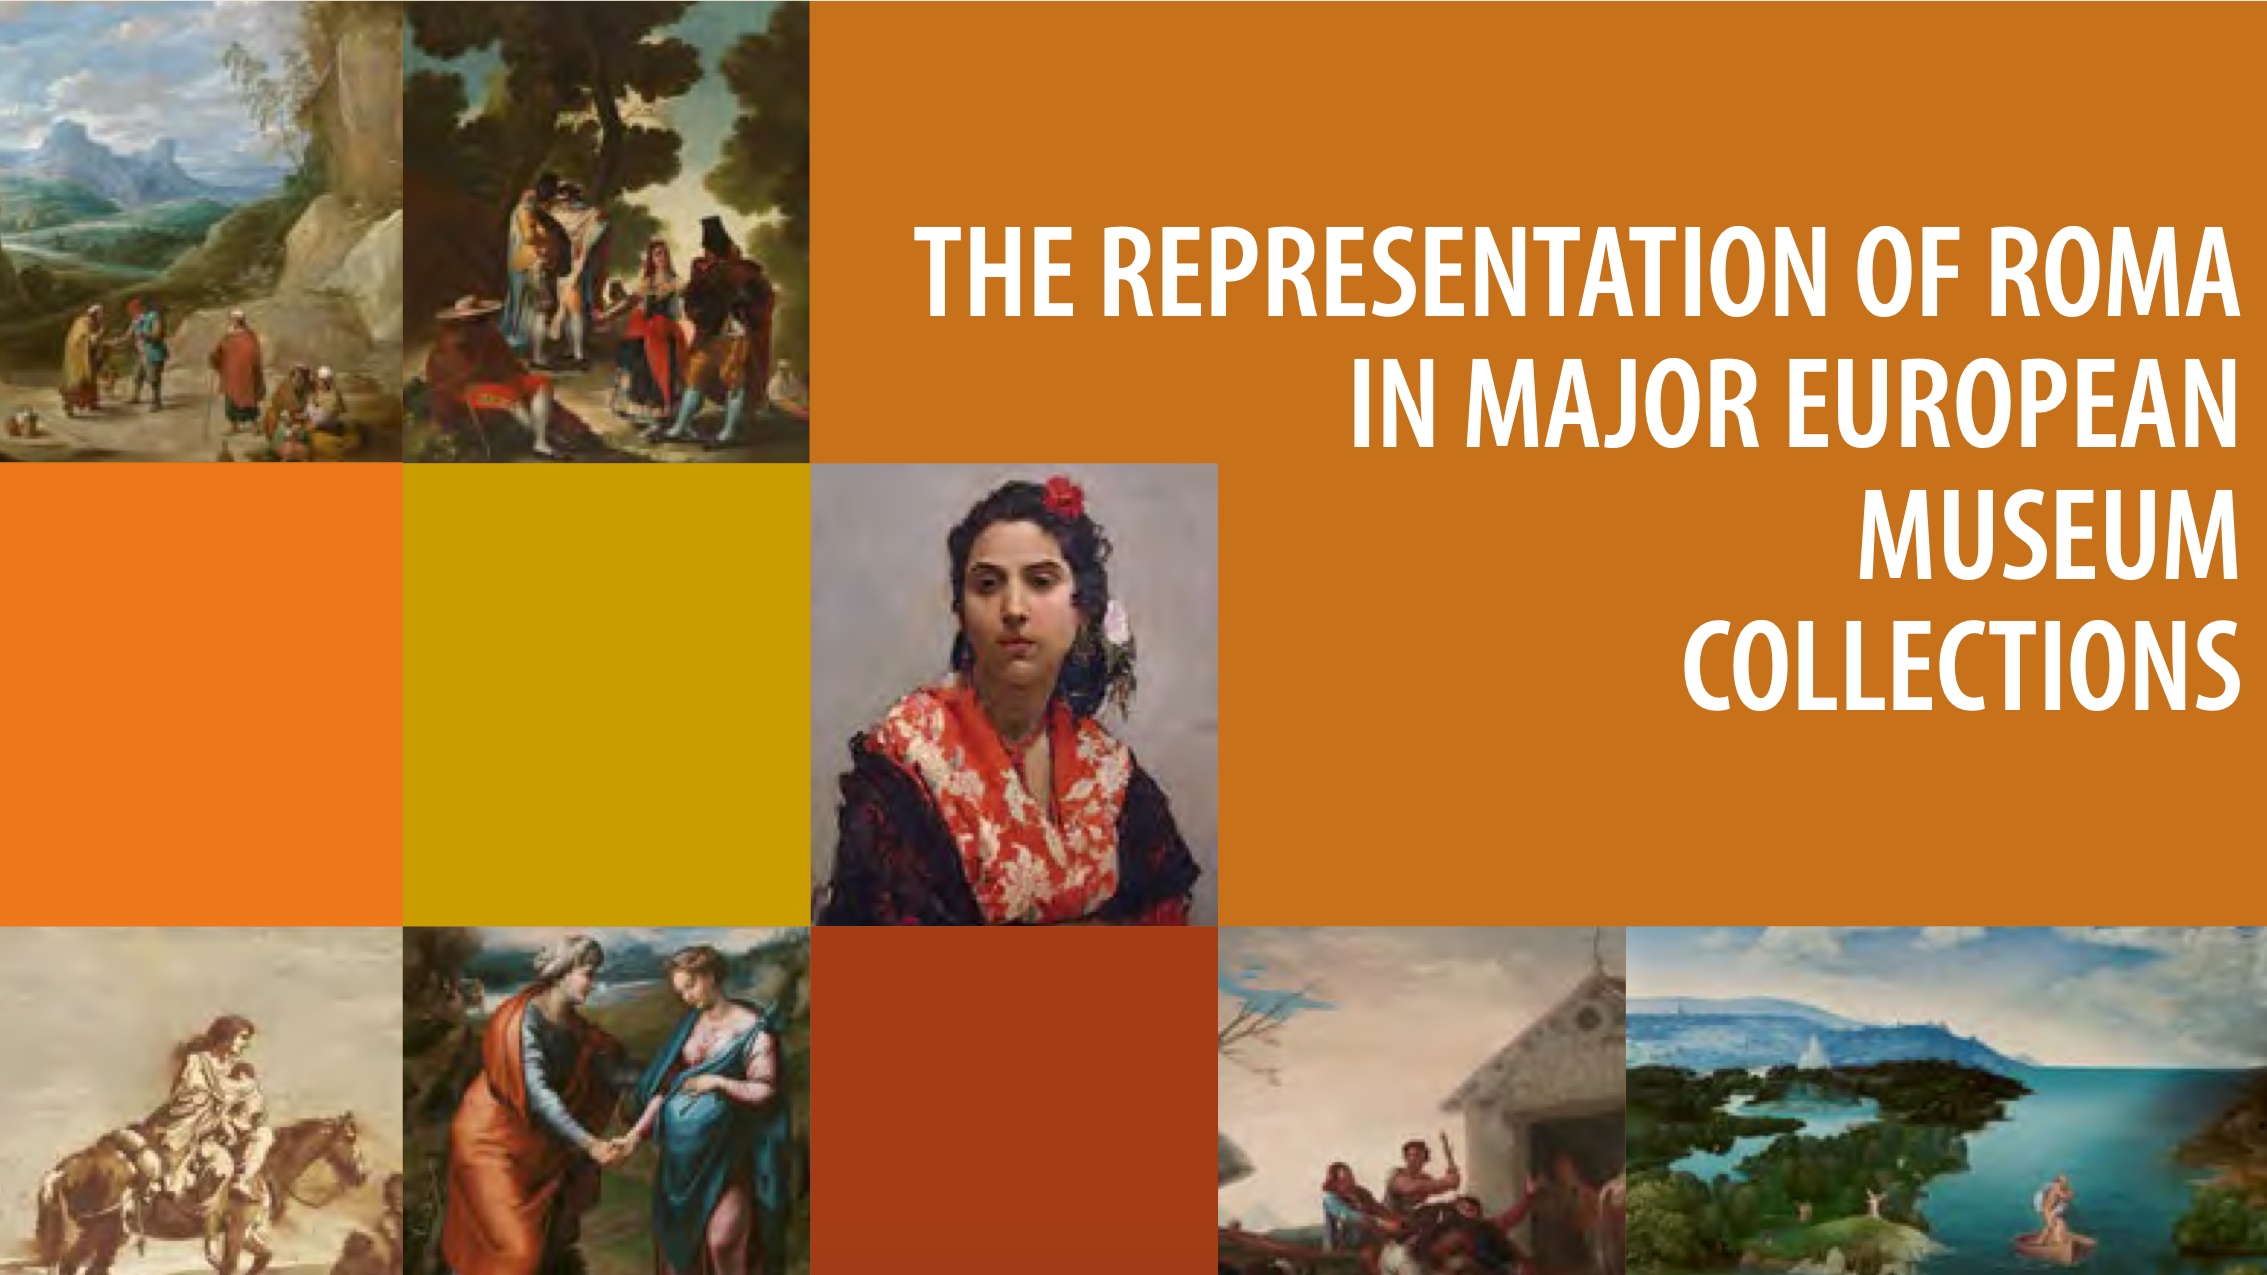 The representation of Roma in major European museum collections: Volume 2 - the Prado